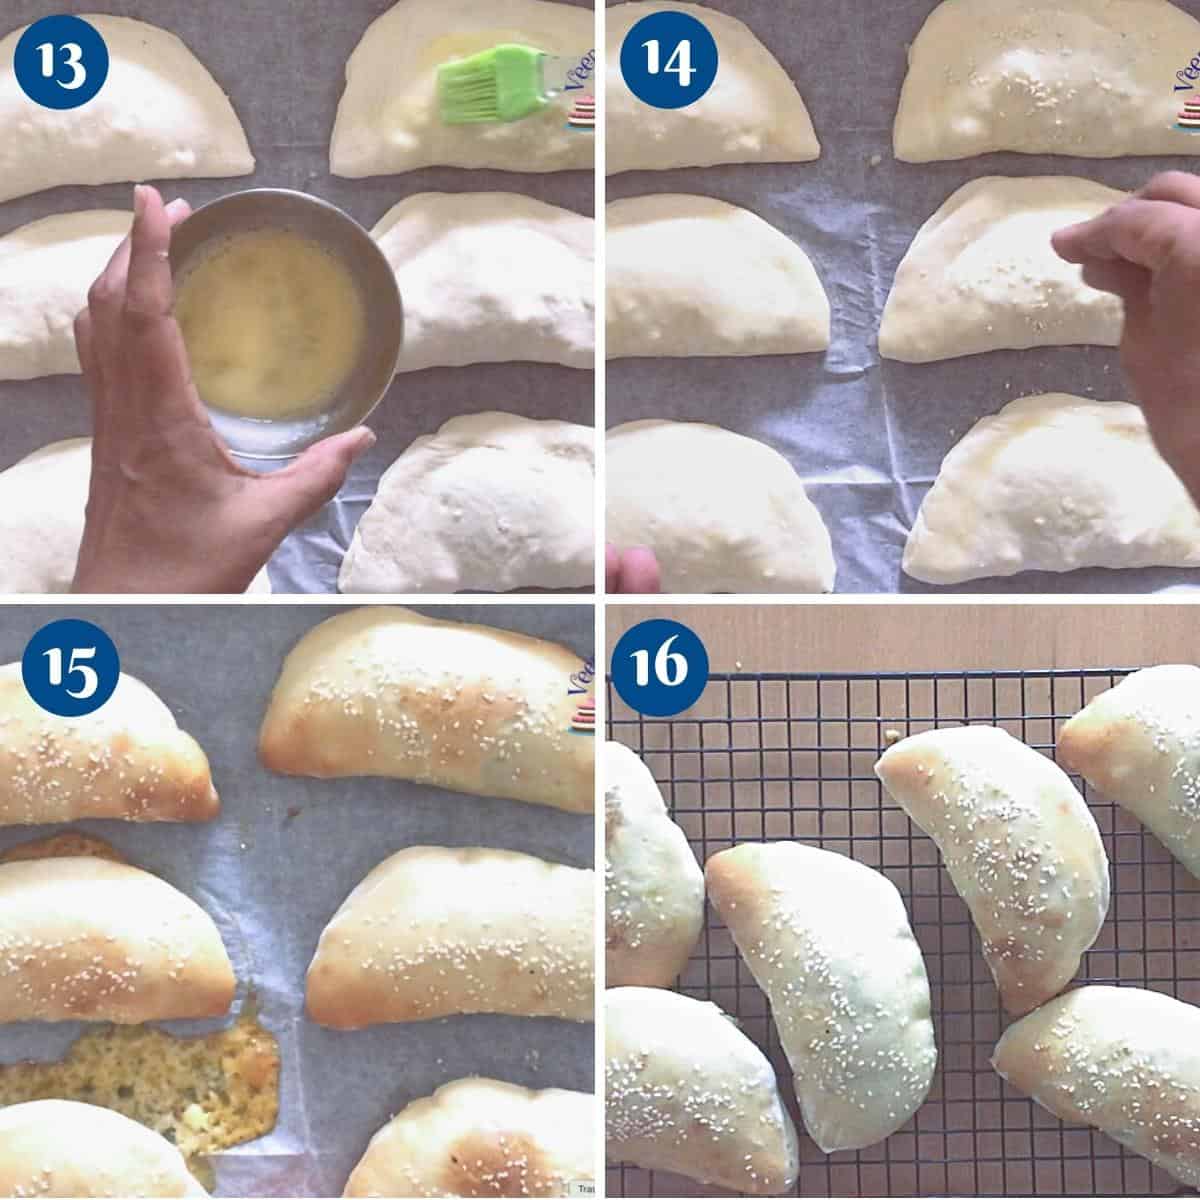 Progress pictures baking the pita bread with potato.